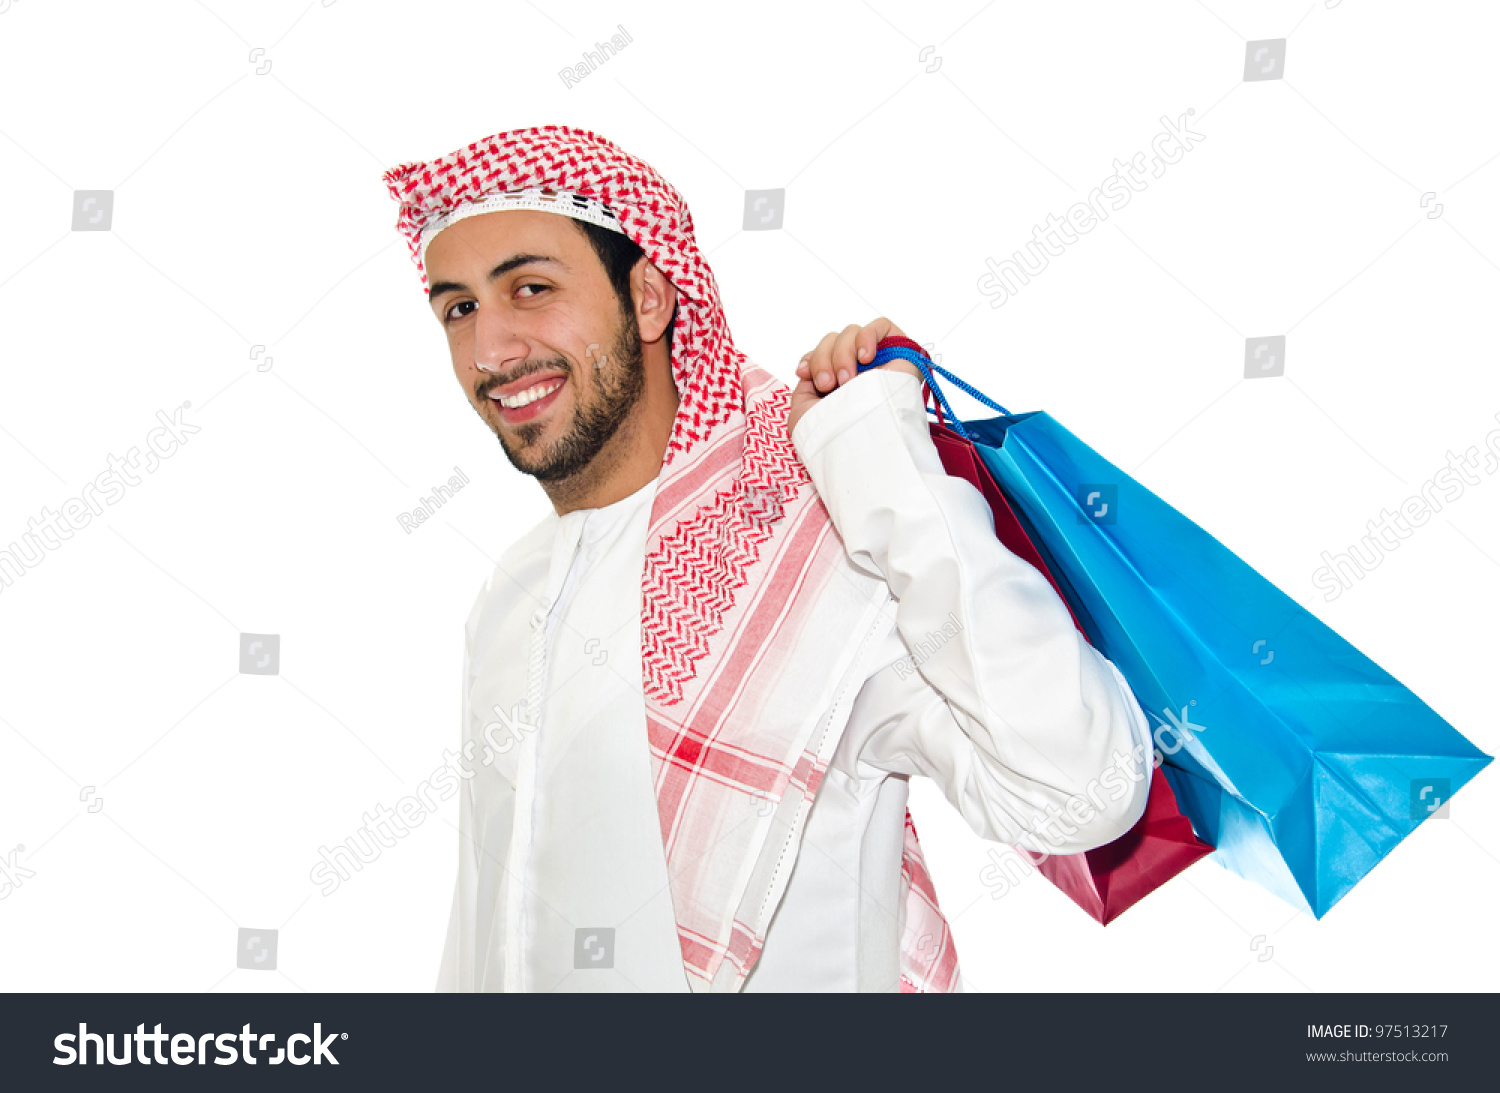 Arab Man Shopping Stock Photo 97513217 : Shutterstock